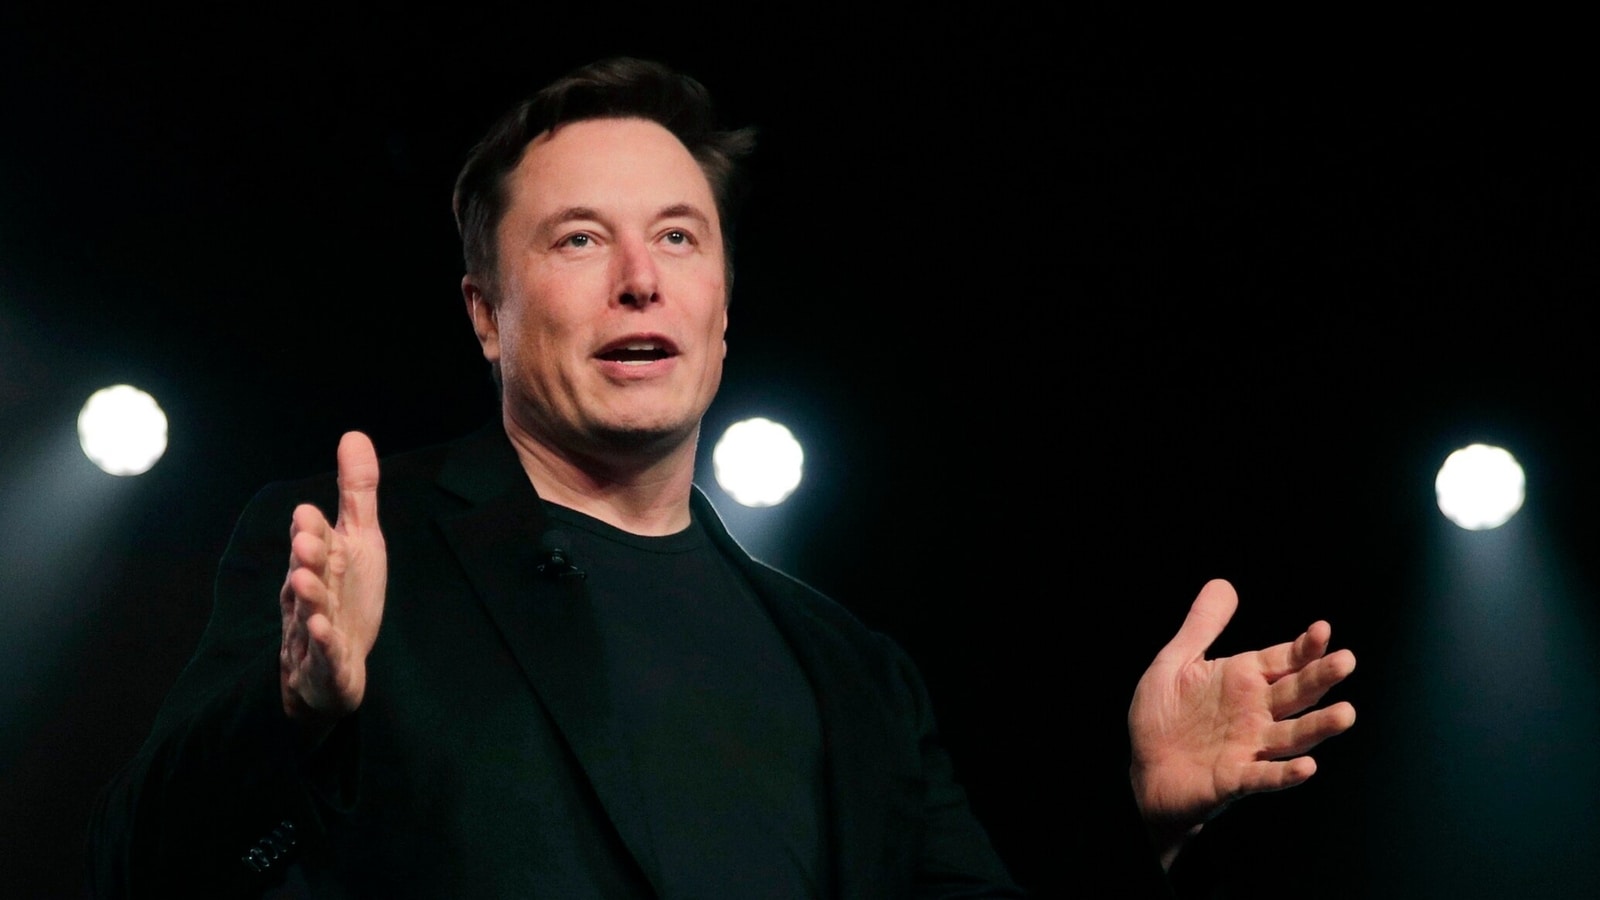 Elon Musk just sold $6.9 billion of Tesla stocks. Why?